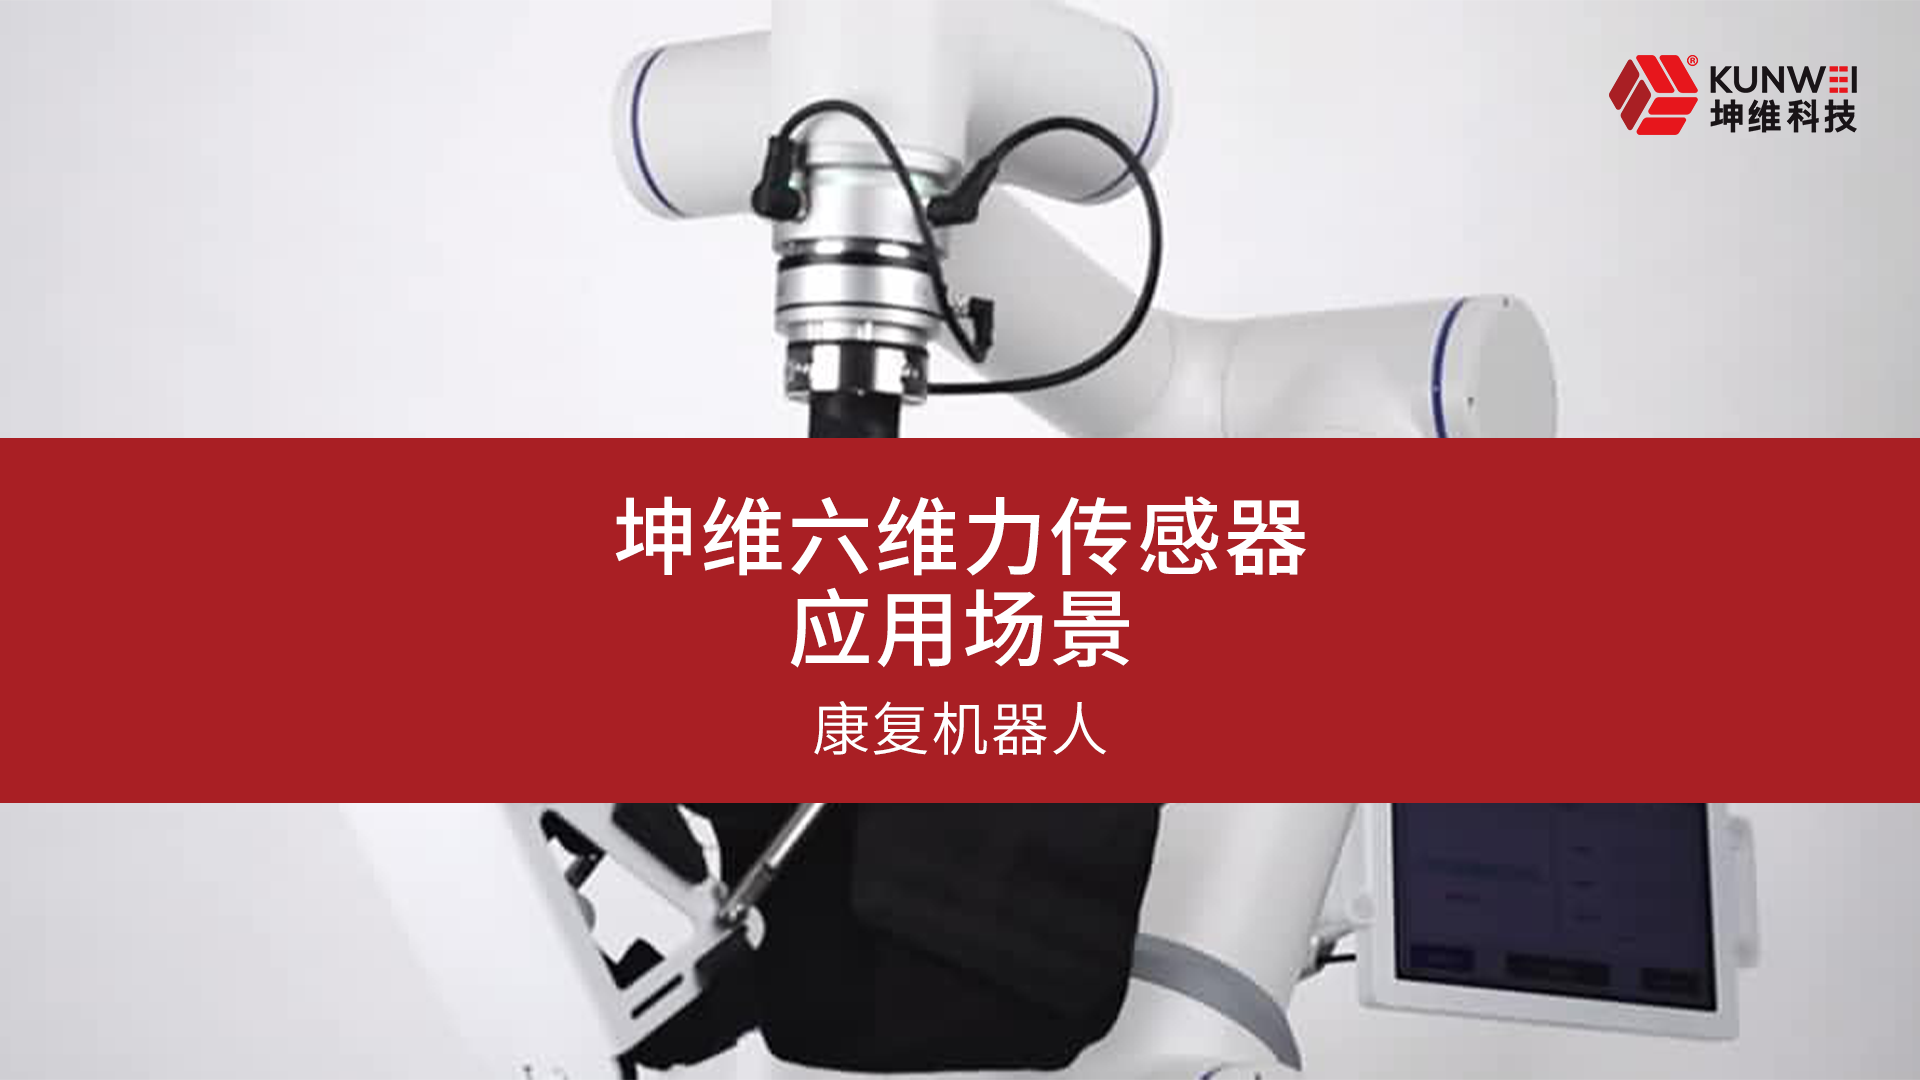 304am永利集团(中国)有限公司-Official Website_活动1016